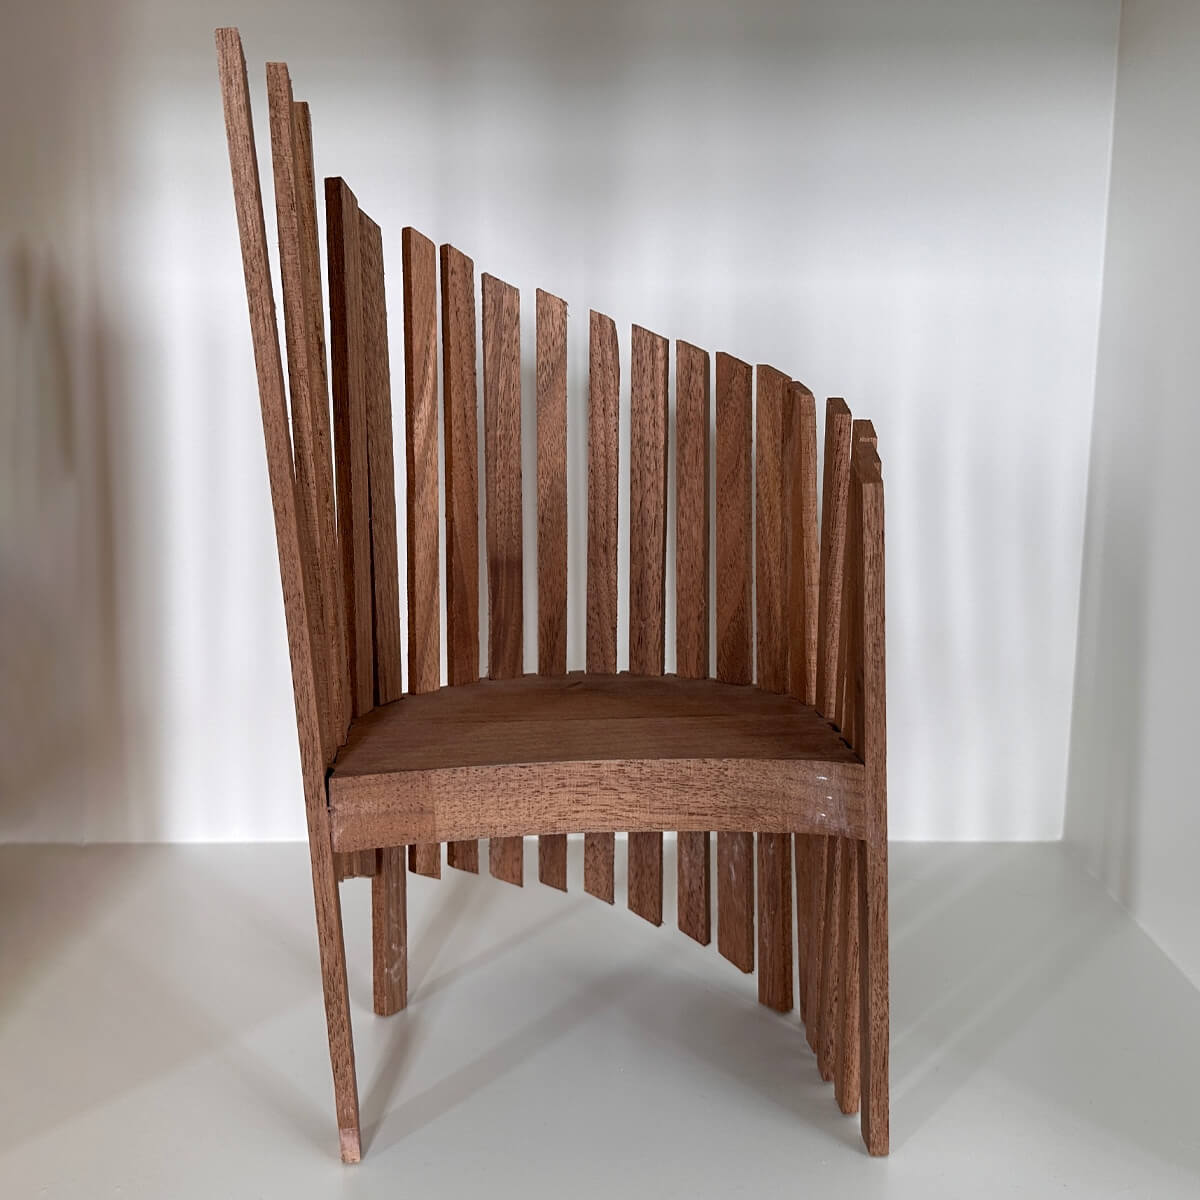 Student wooden chair design 